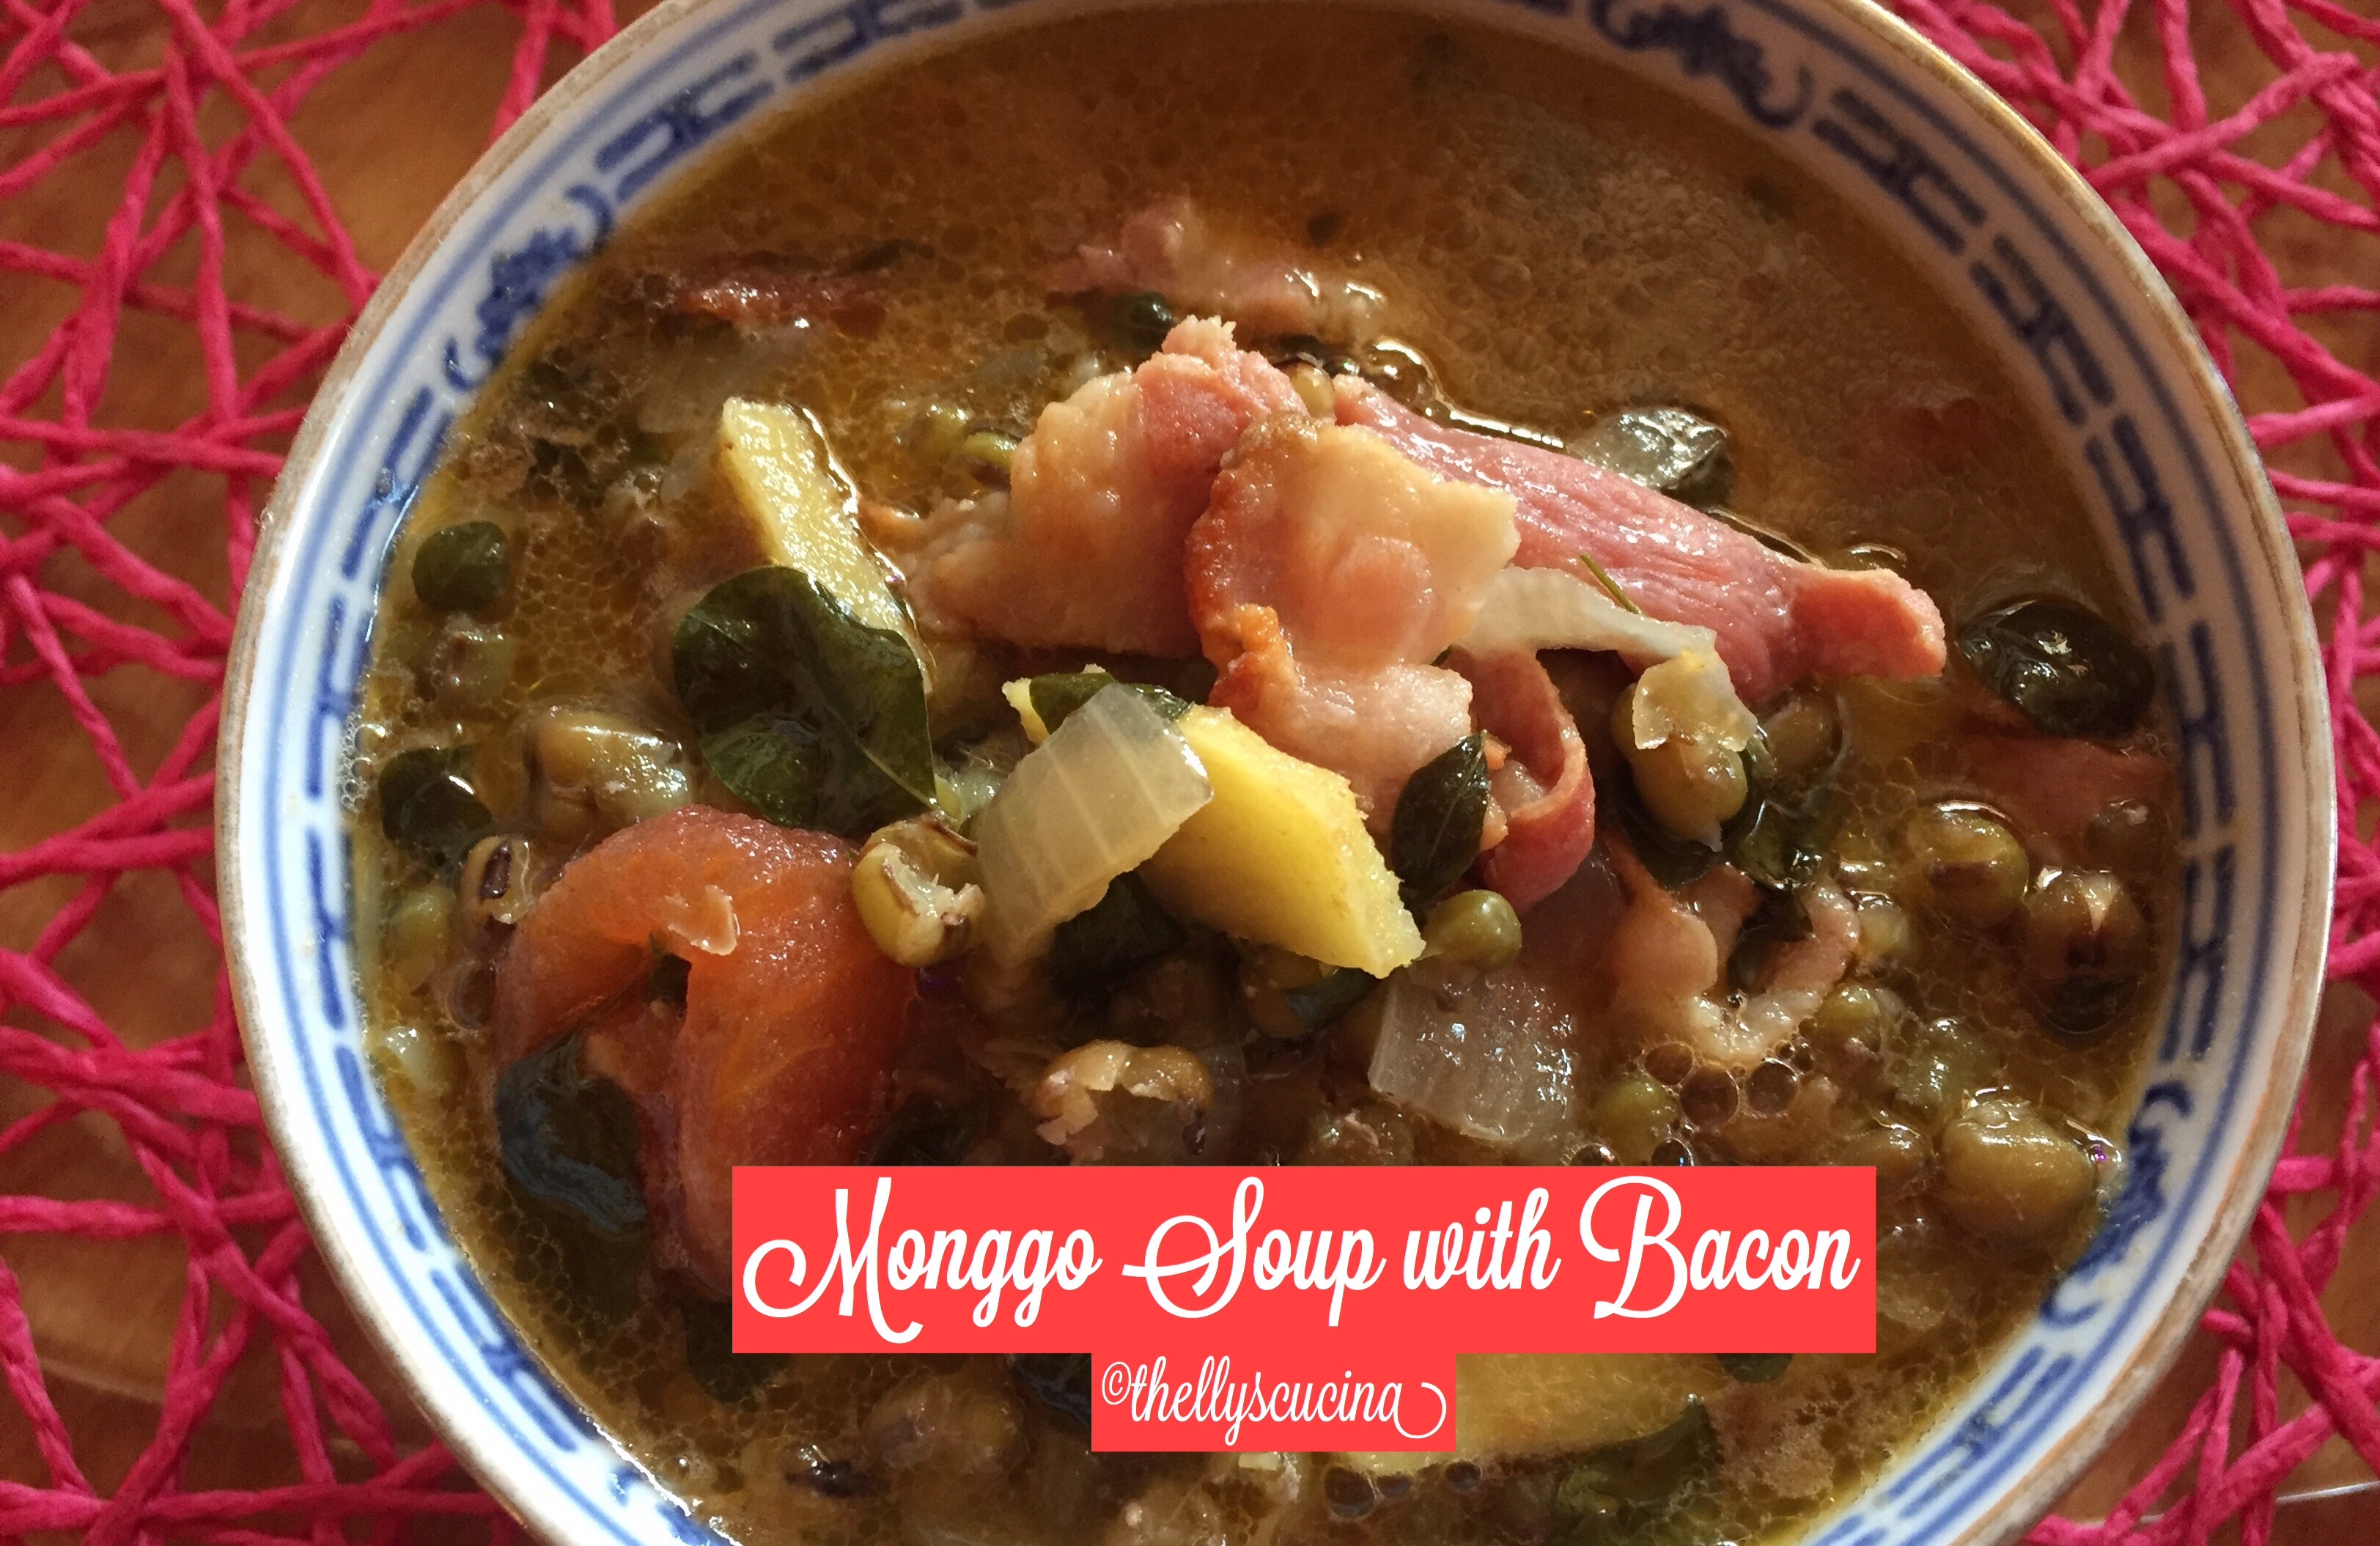 Monggo soup